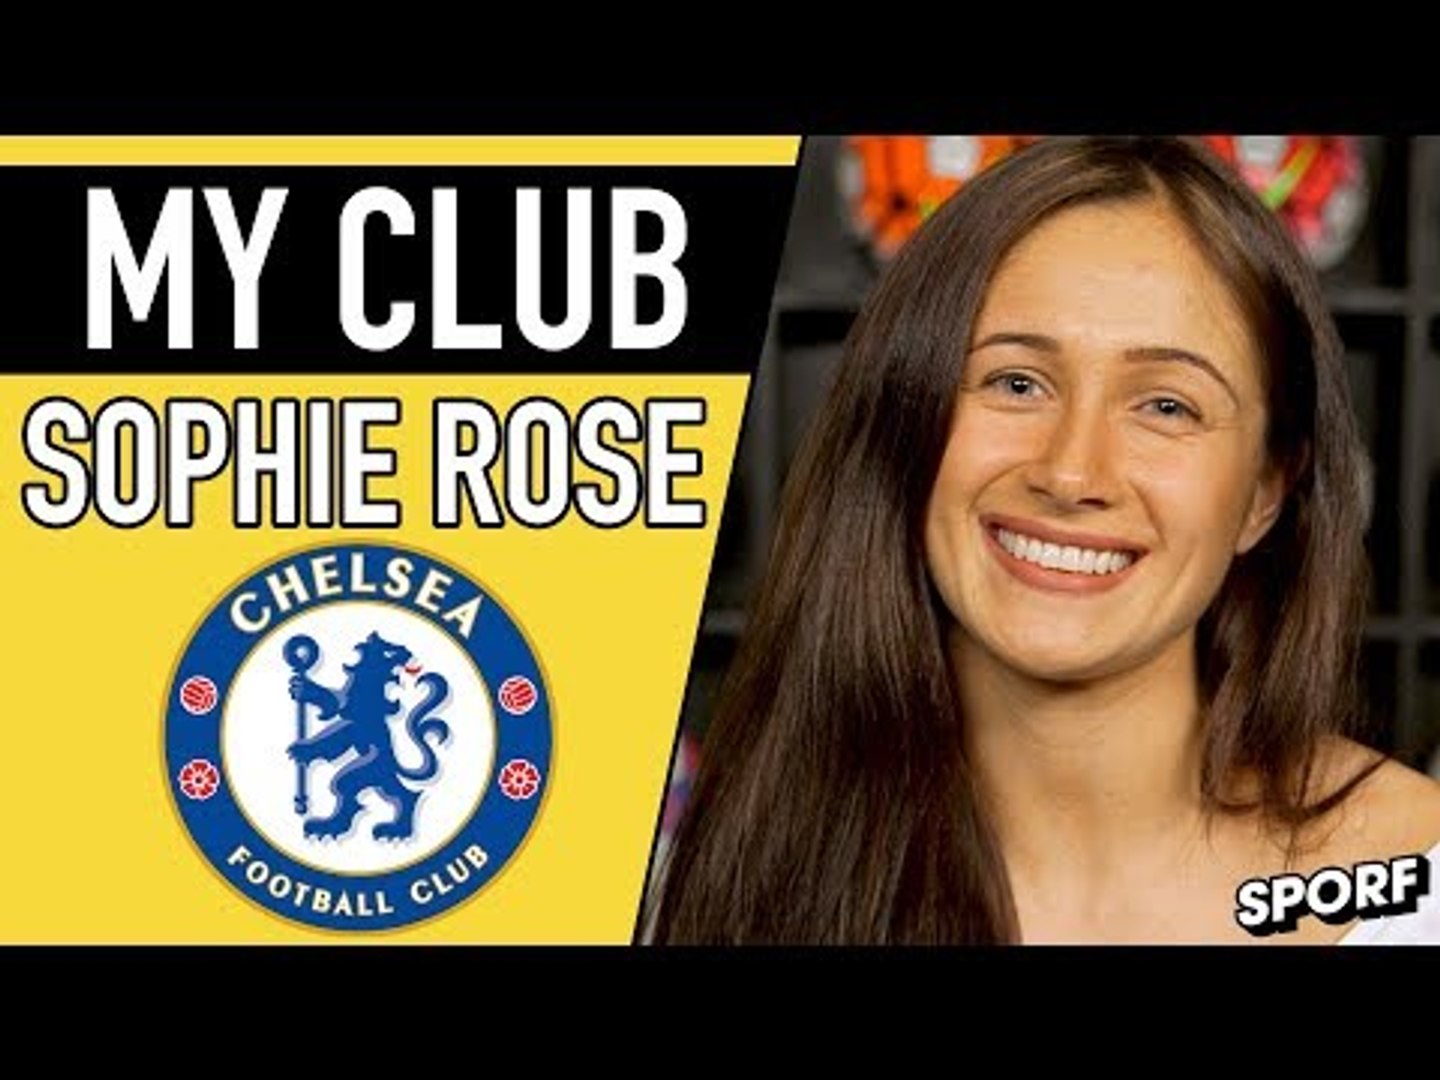 Chelsea fans channel sophie